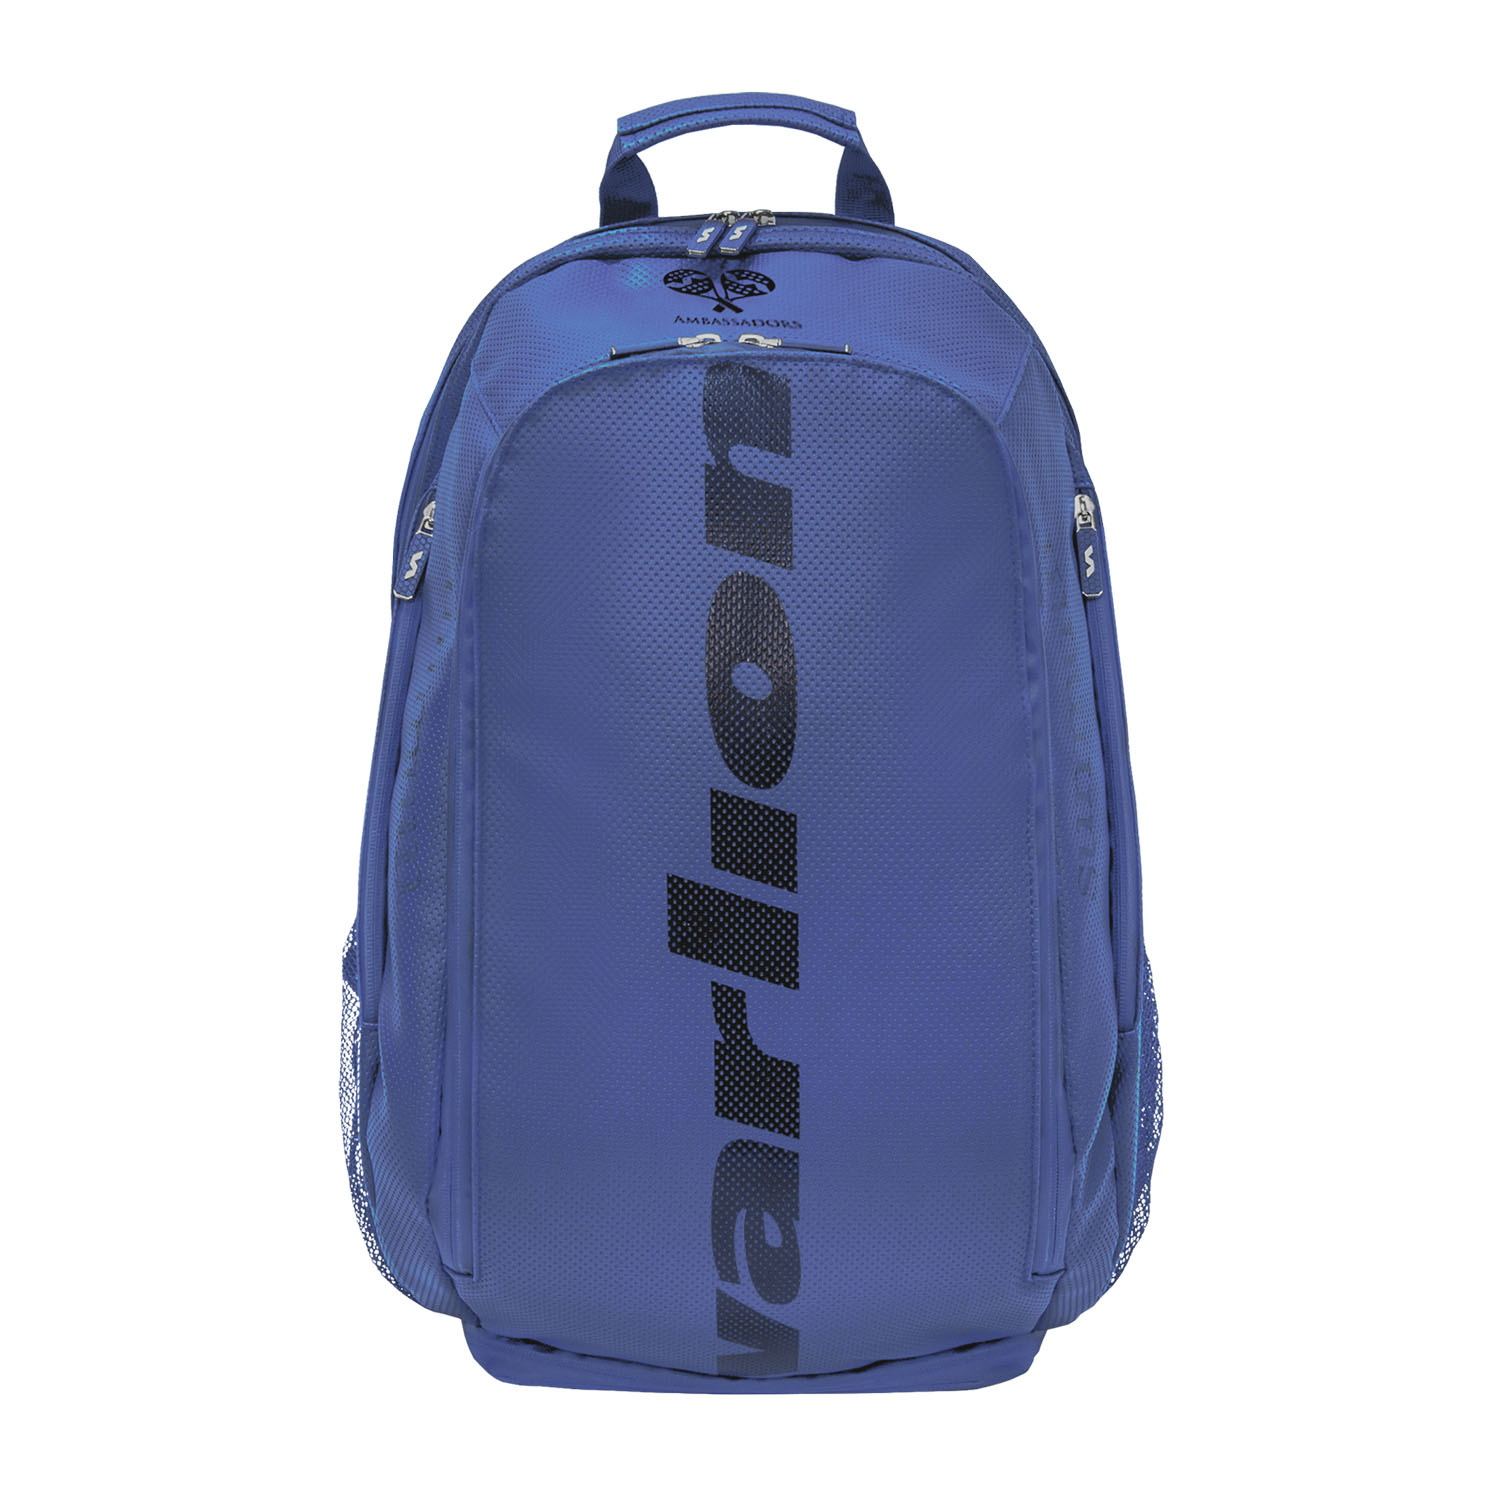 Varlion Ambassadors Backpack - Dark Blue